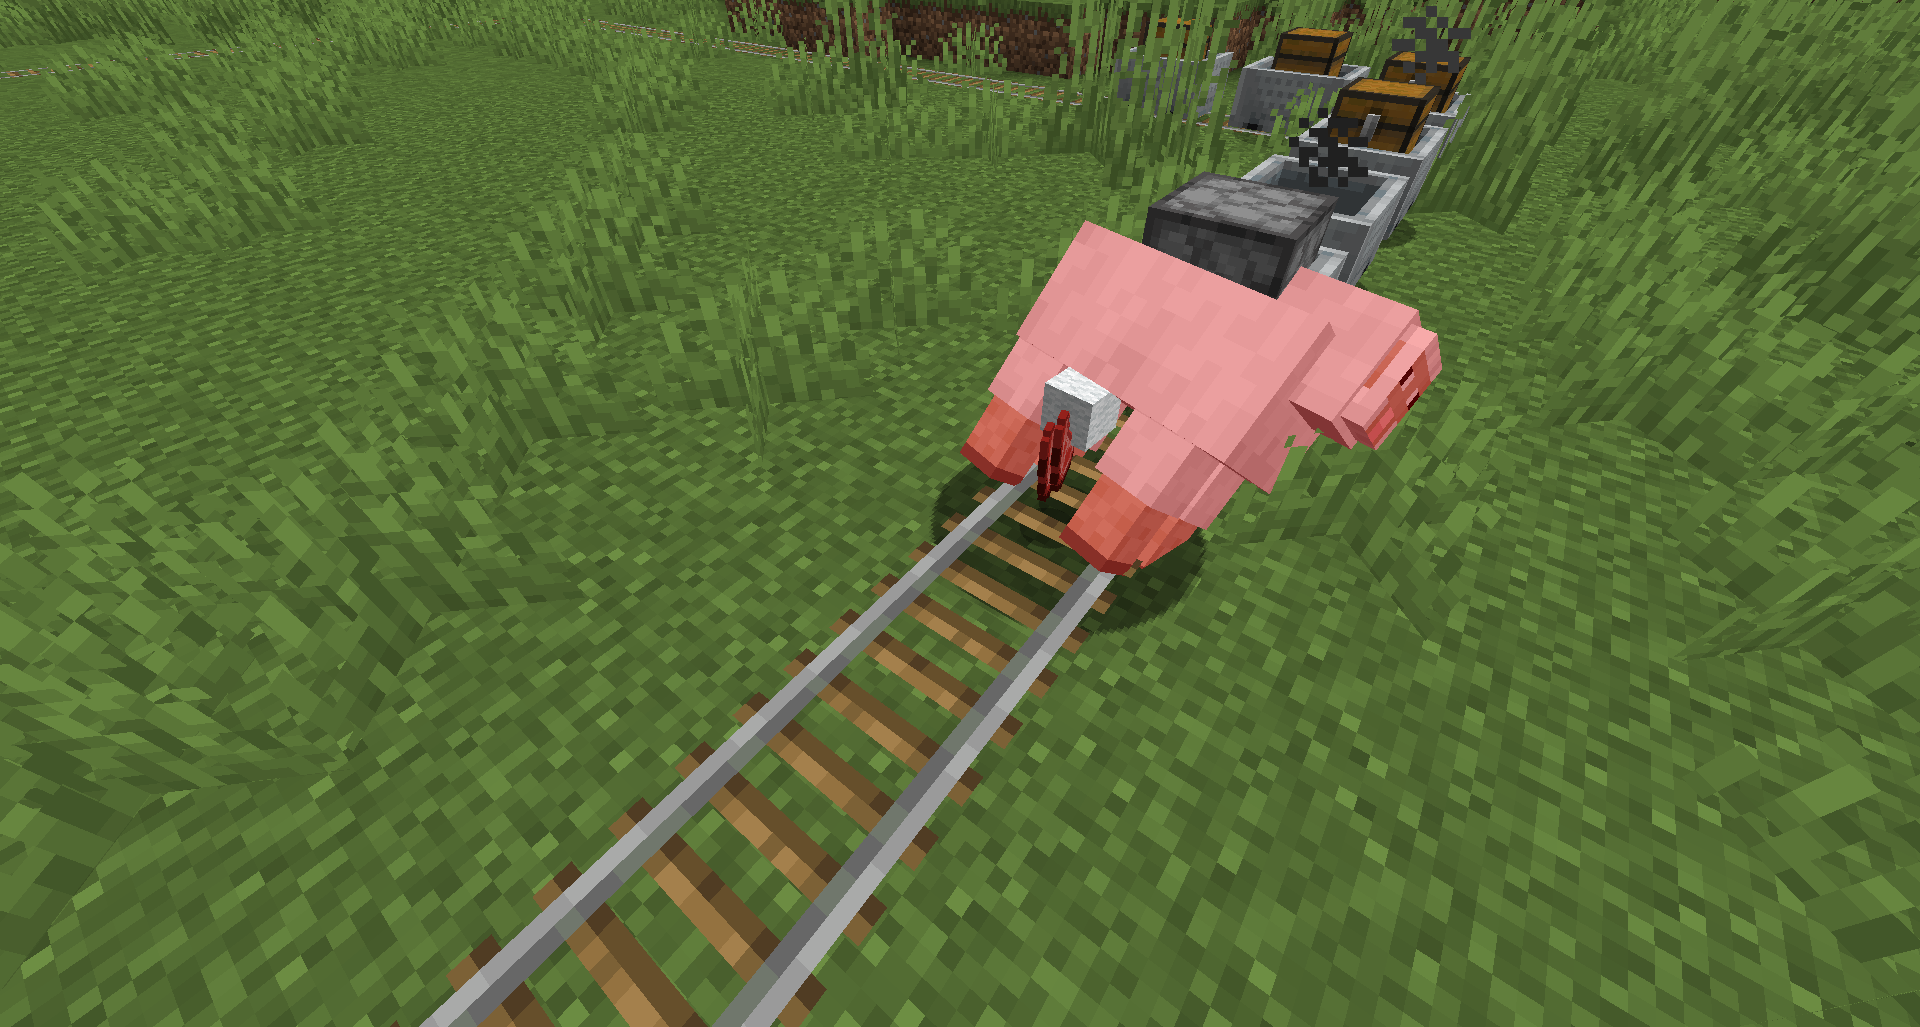 Minecart Train running over a sheep